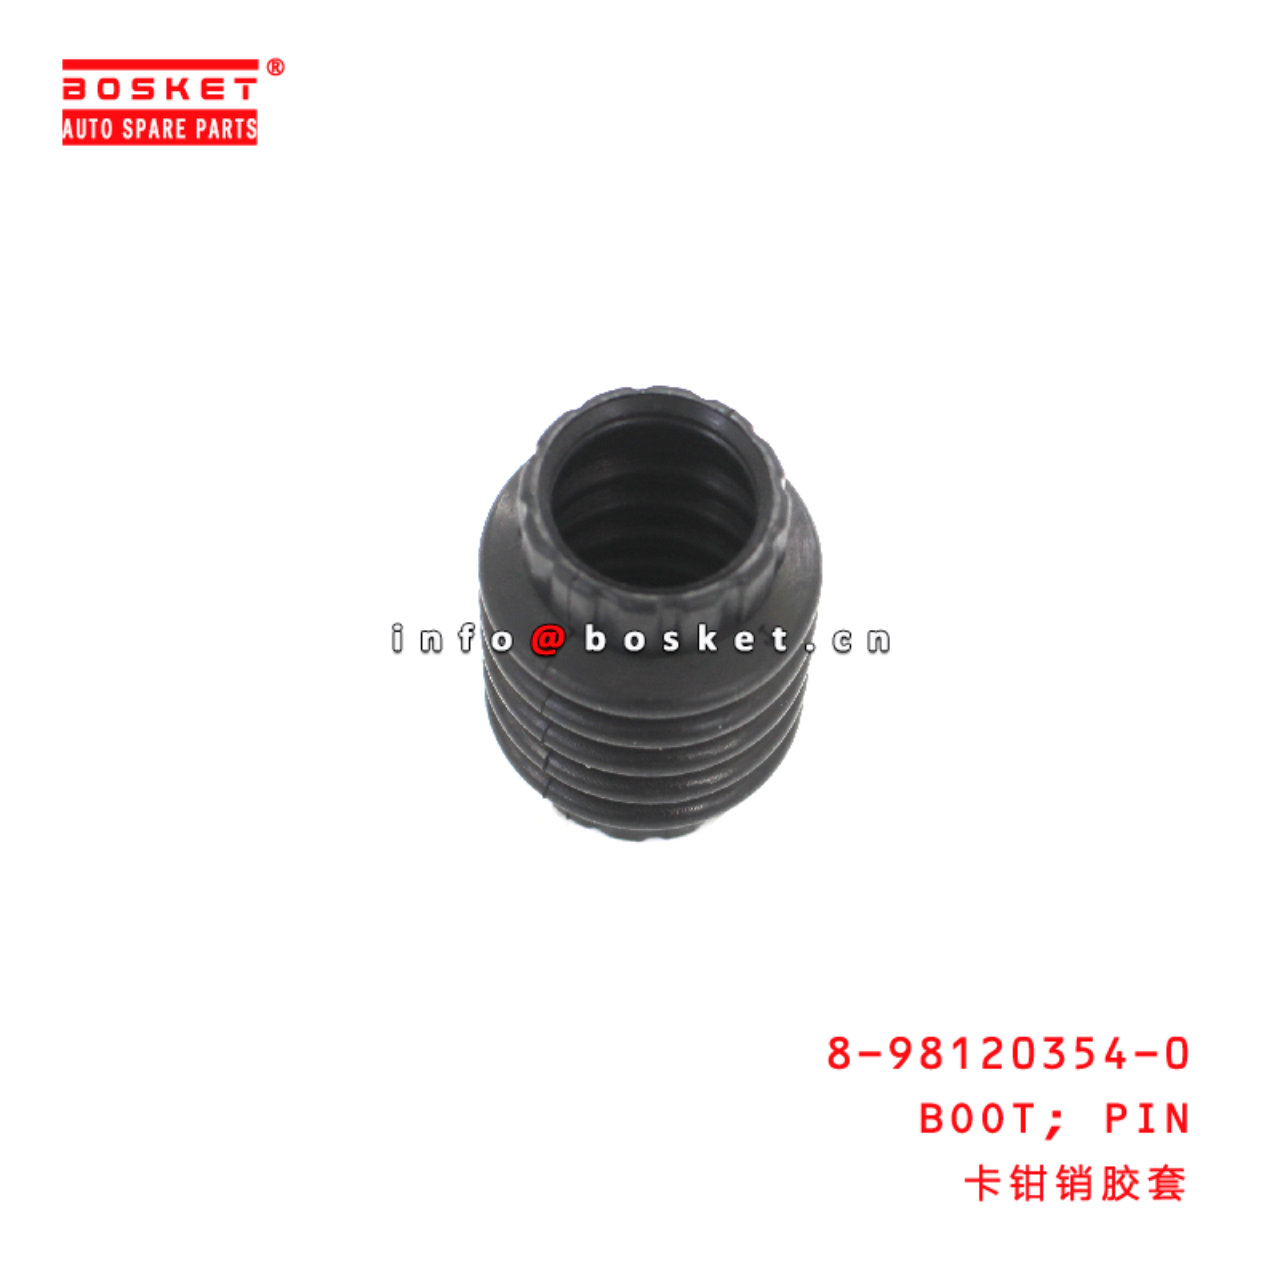 8-98120354-0 Pin Boot suitable for ISUZU NPR  8981203540